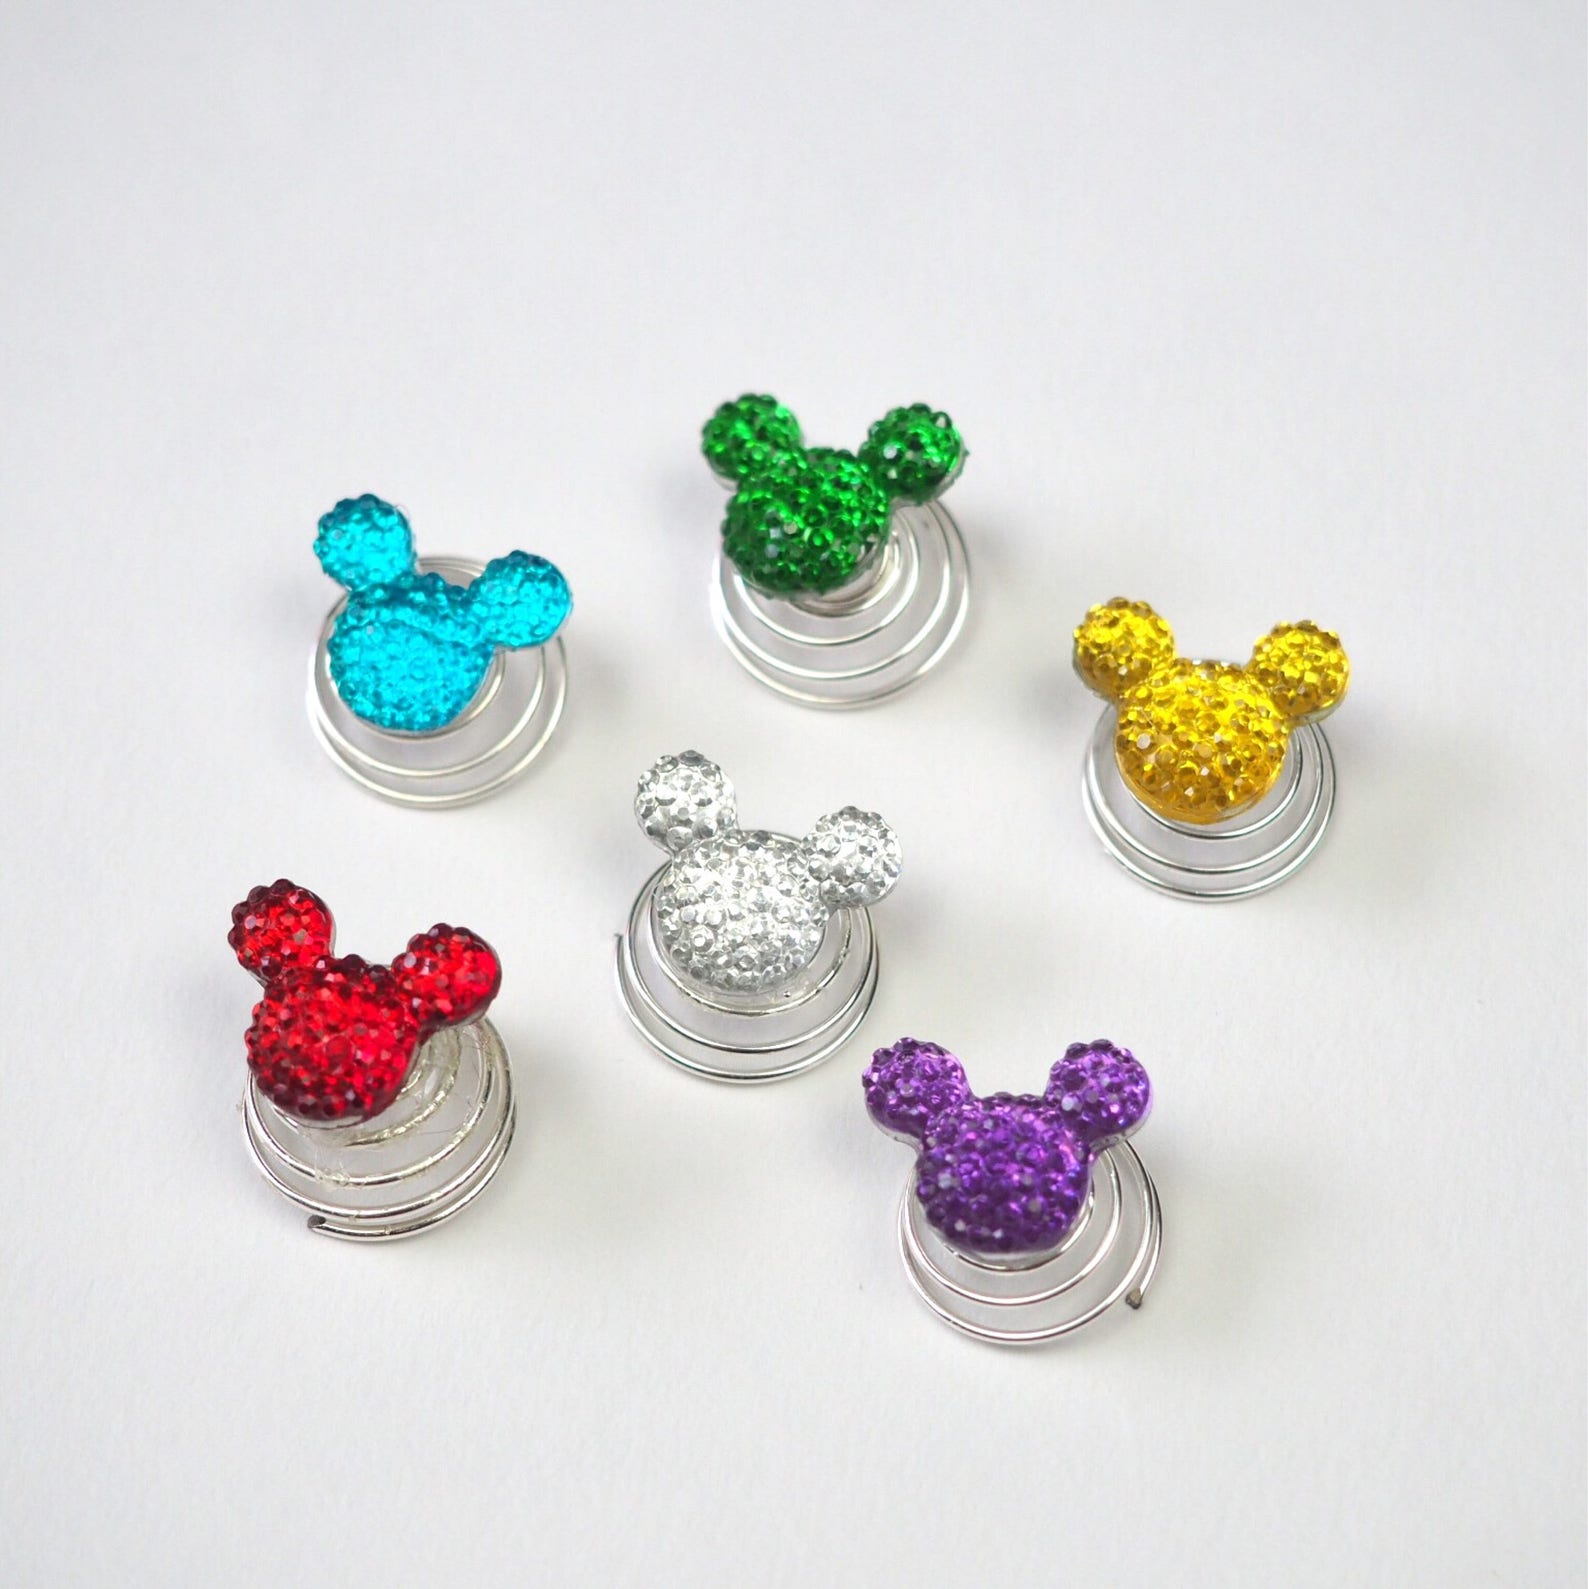 Disney Mickey Mouse Ears HAIR SWIRLS Set of 6 - Etsy